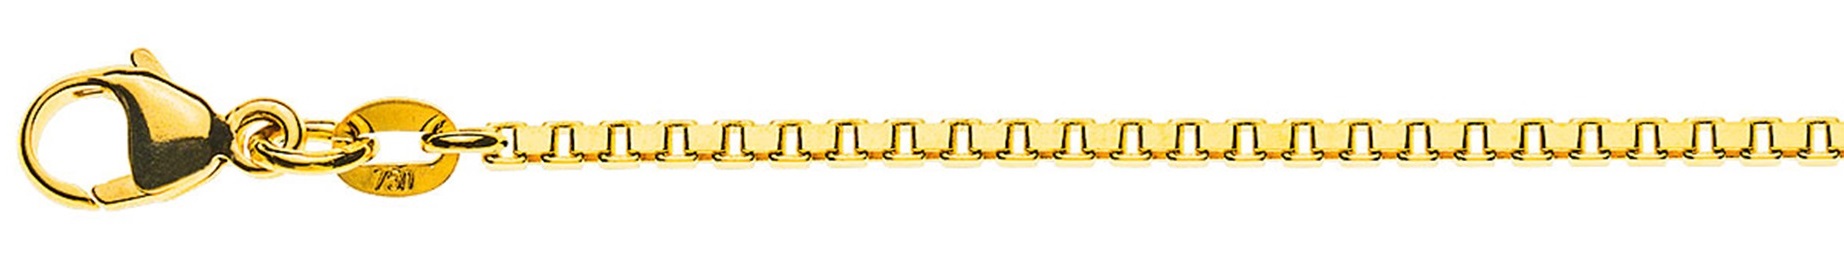 AURONOS Prestige Necklace yellow gold 18K Venetian chain diamond 45cm 1.6mm